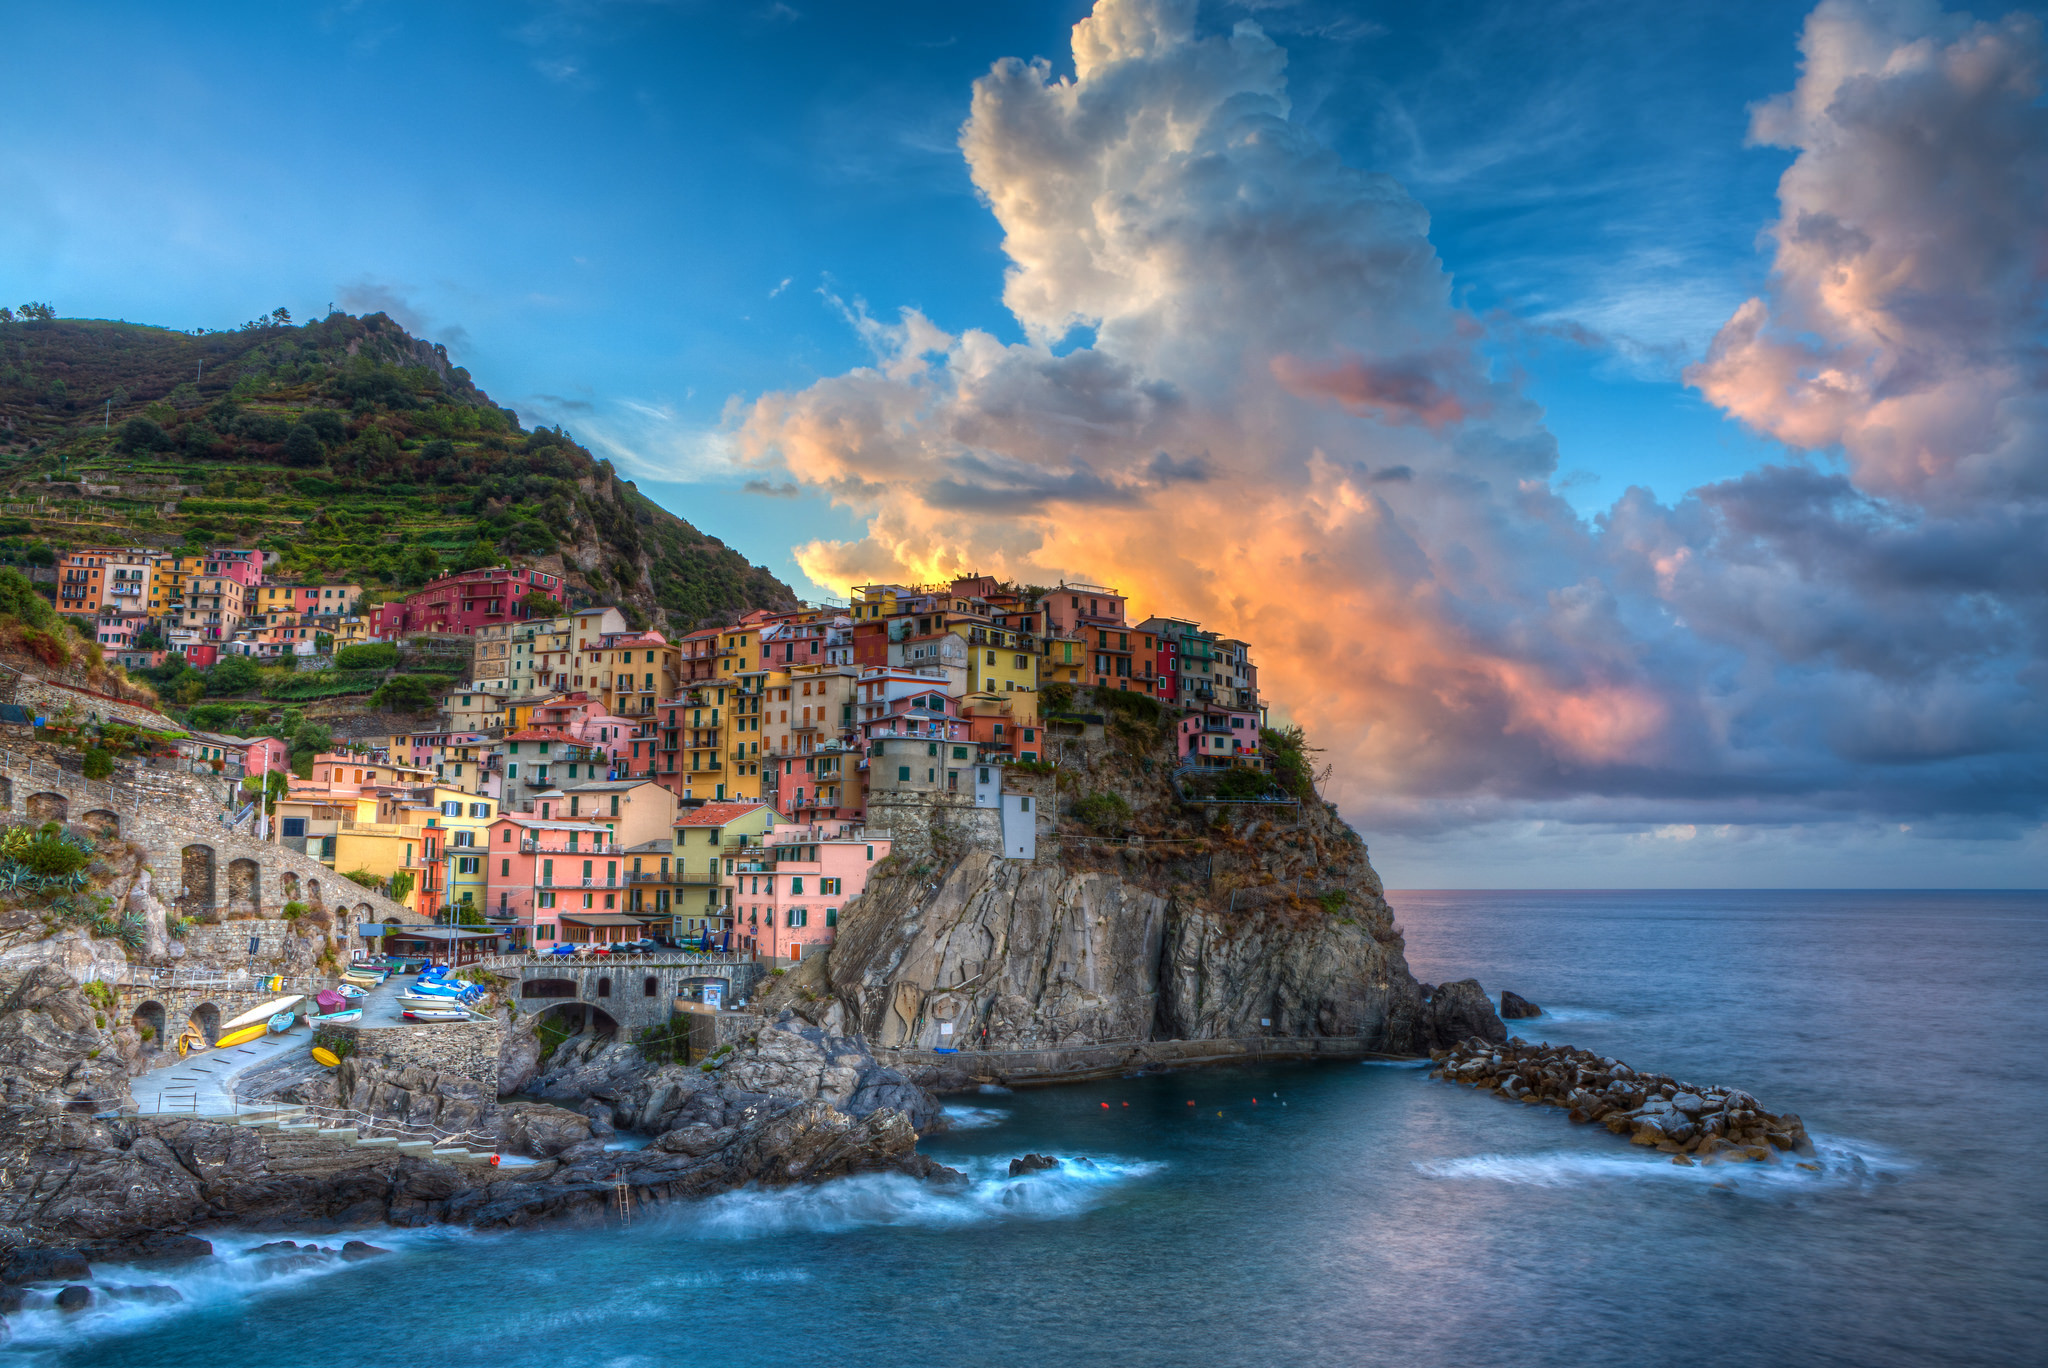 Man Made Manarola Italy Village Rock Mountain Ocean House Colorful HDR 2048x1368